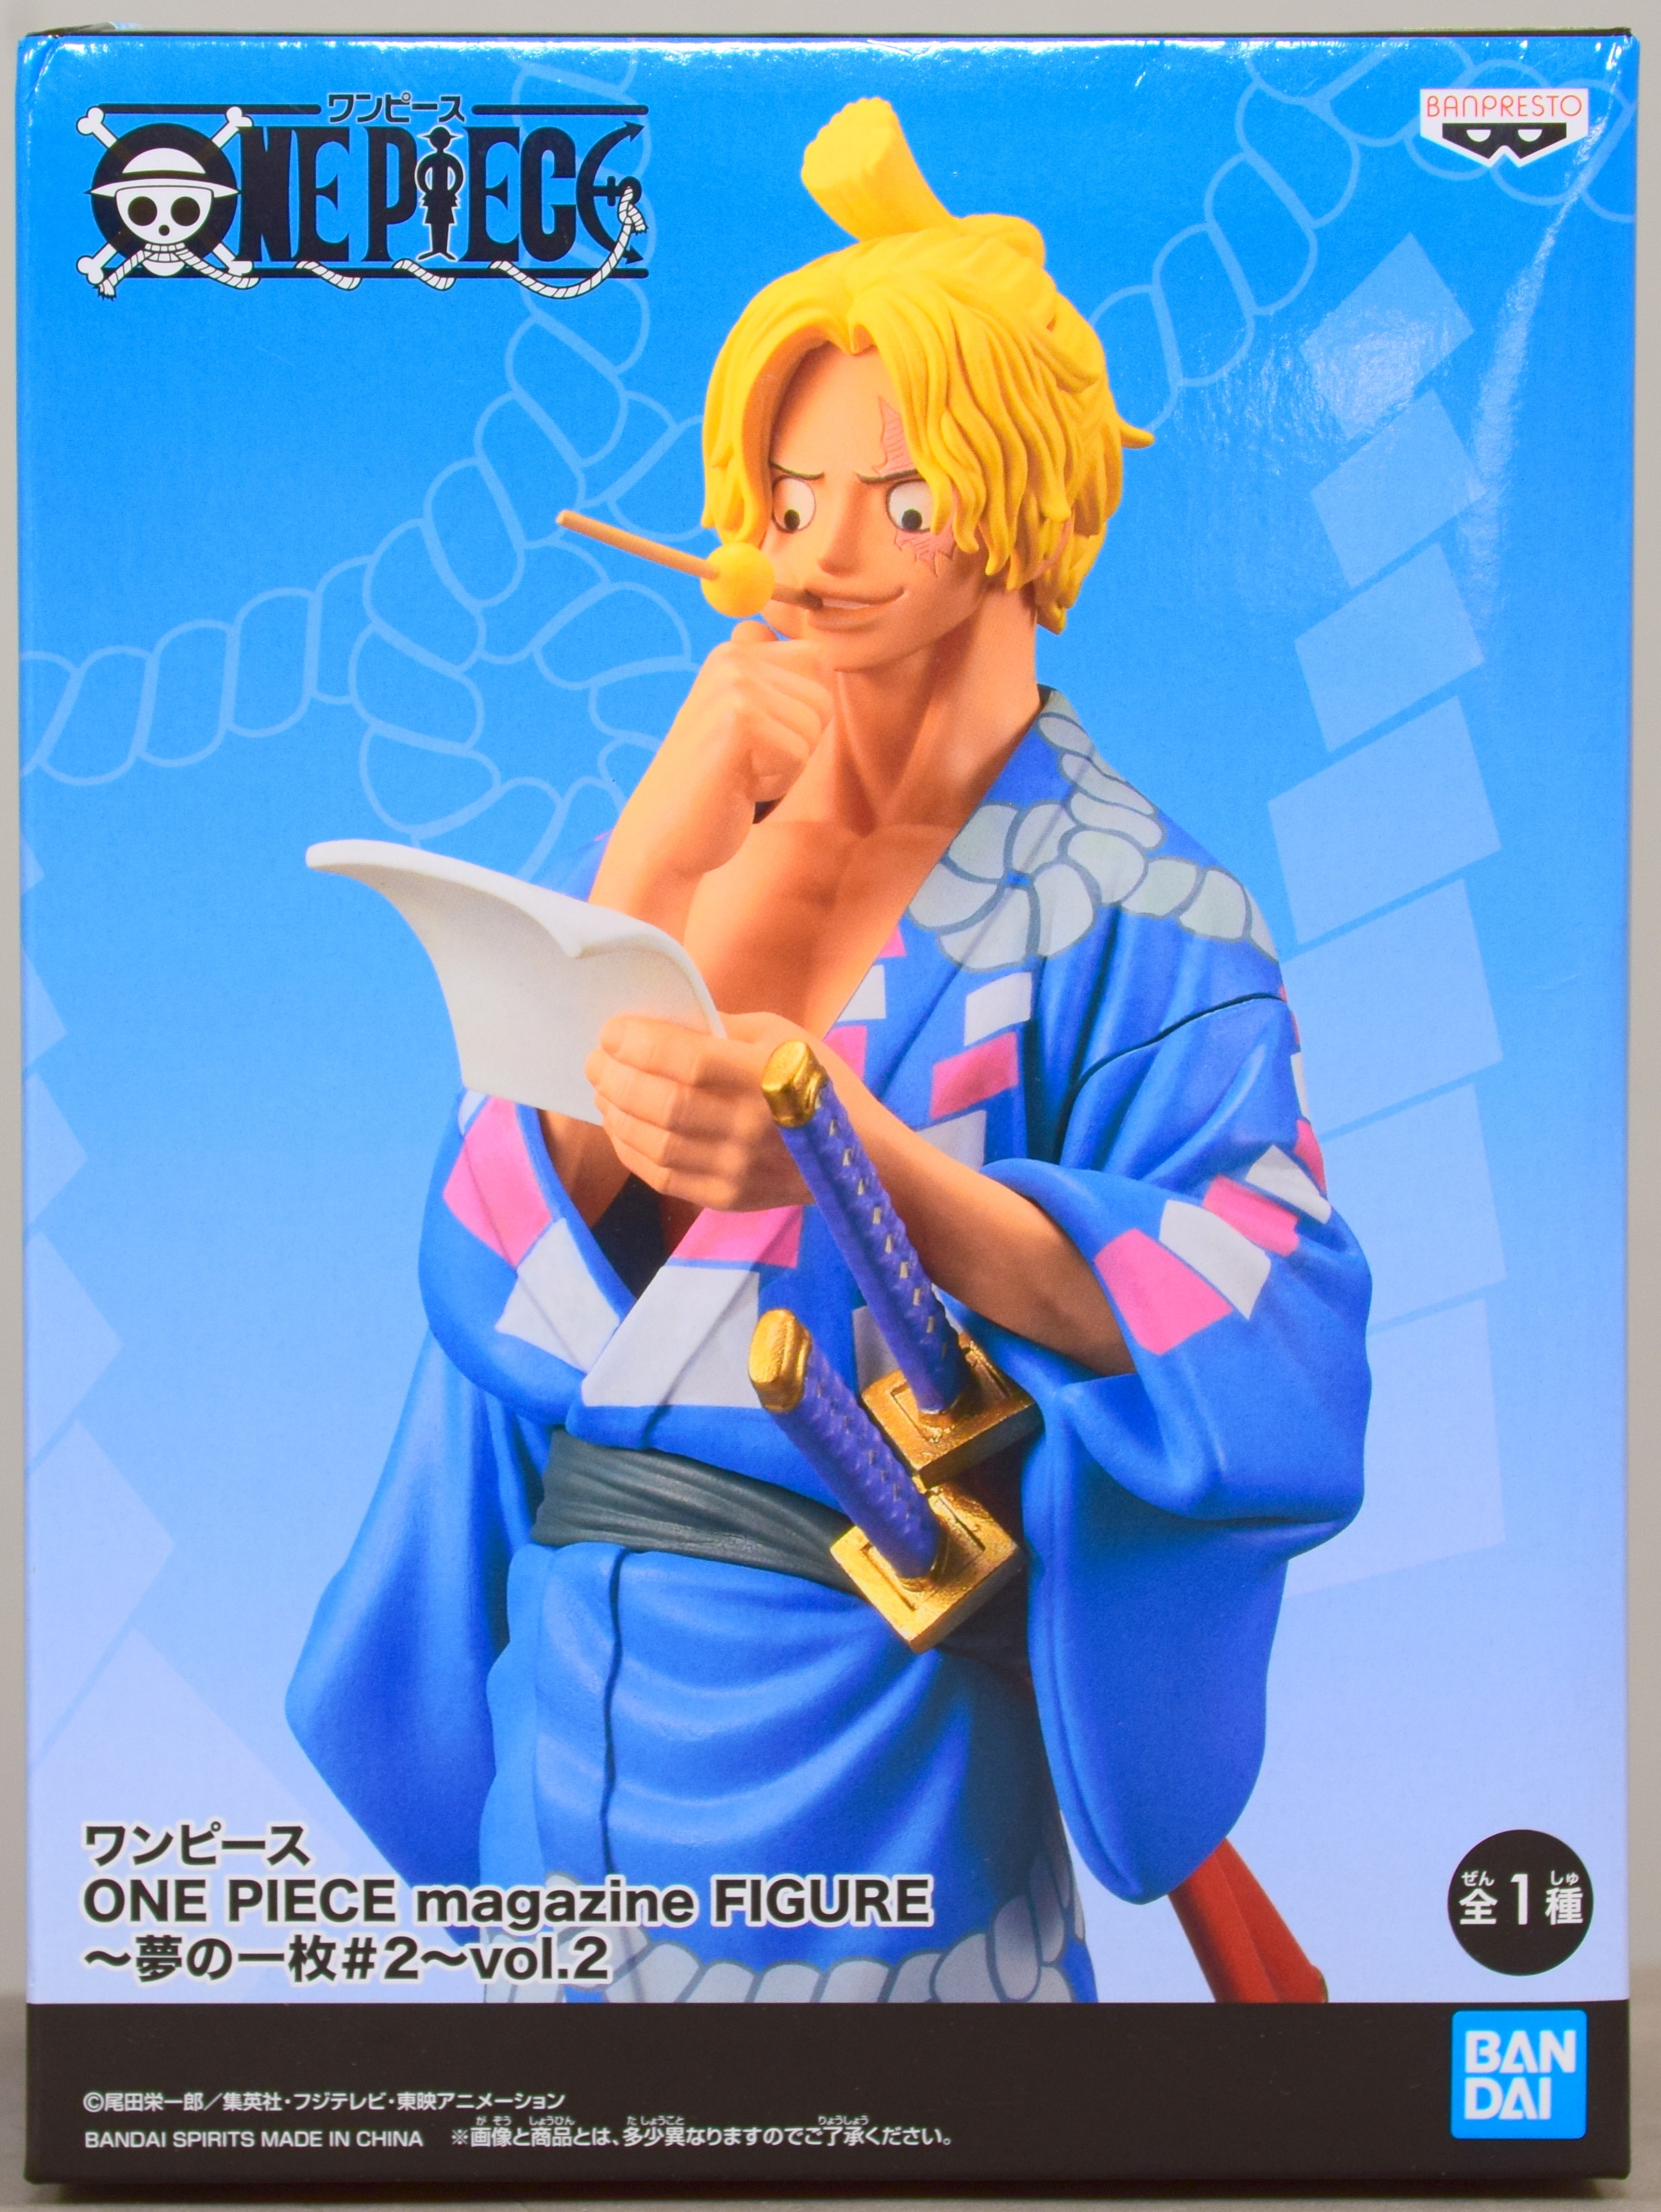 Bandai Spirits ワンピース Magazine Figure 夢の一枚 2 Vol 2 サボ まんだらけ Mandarake